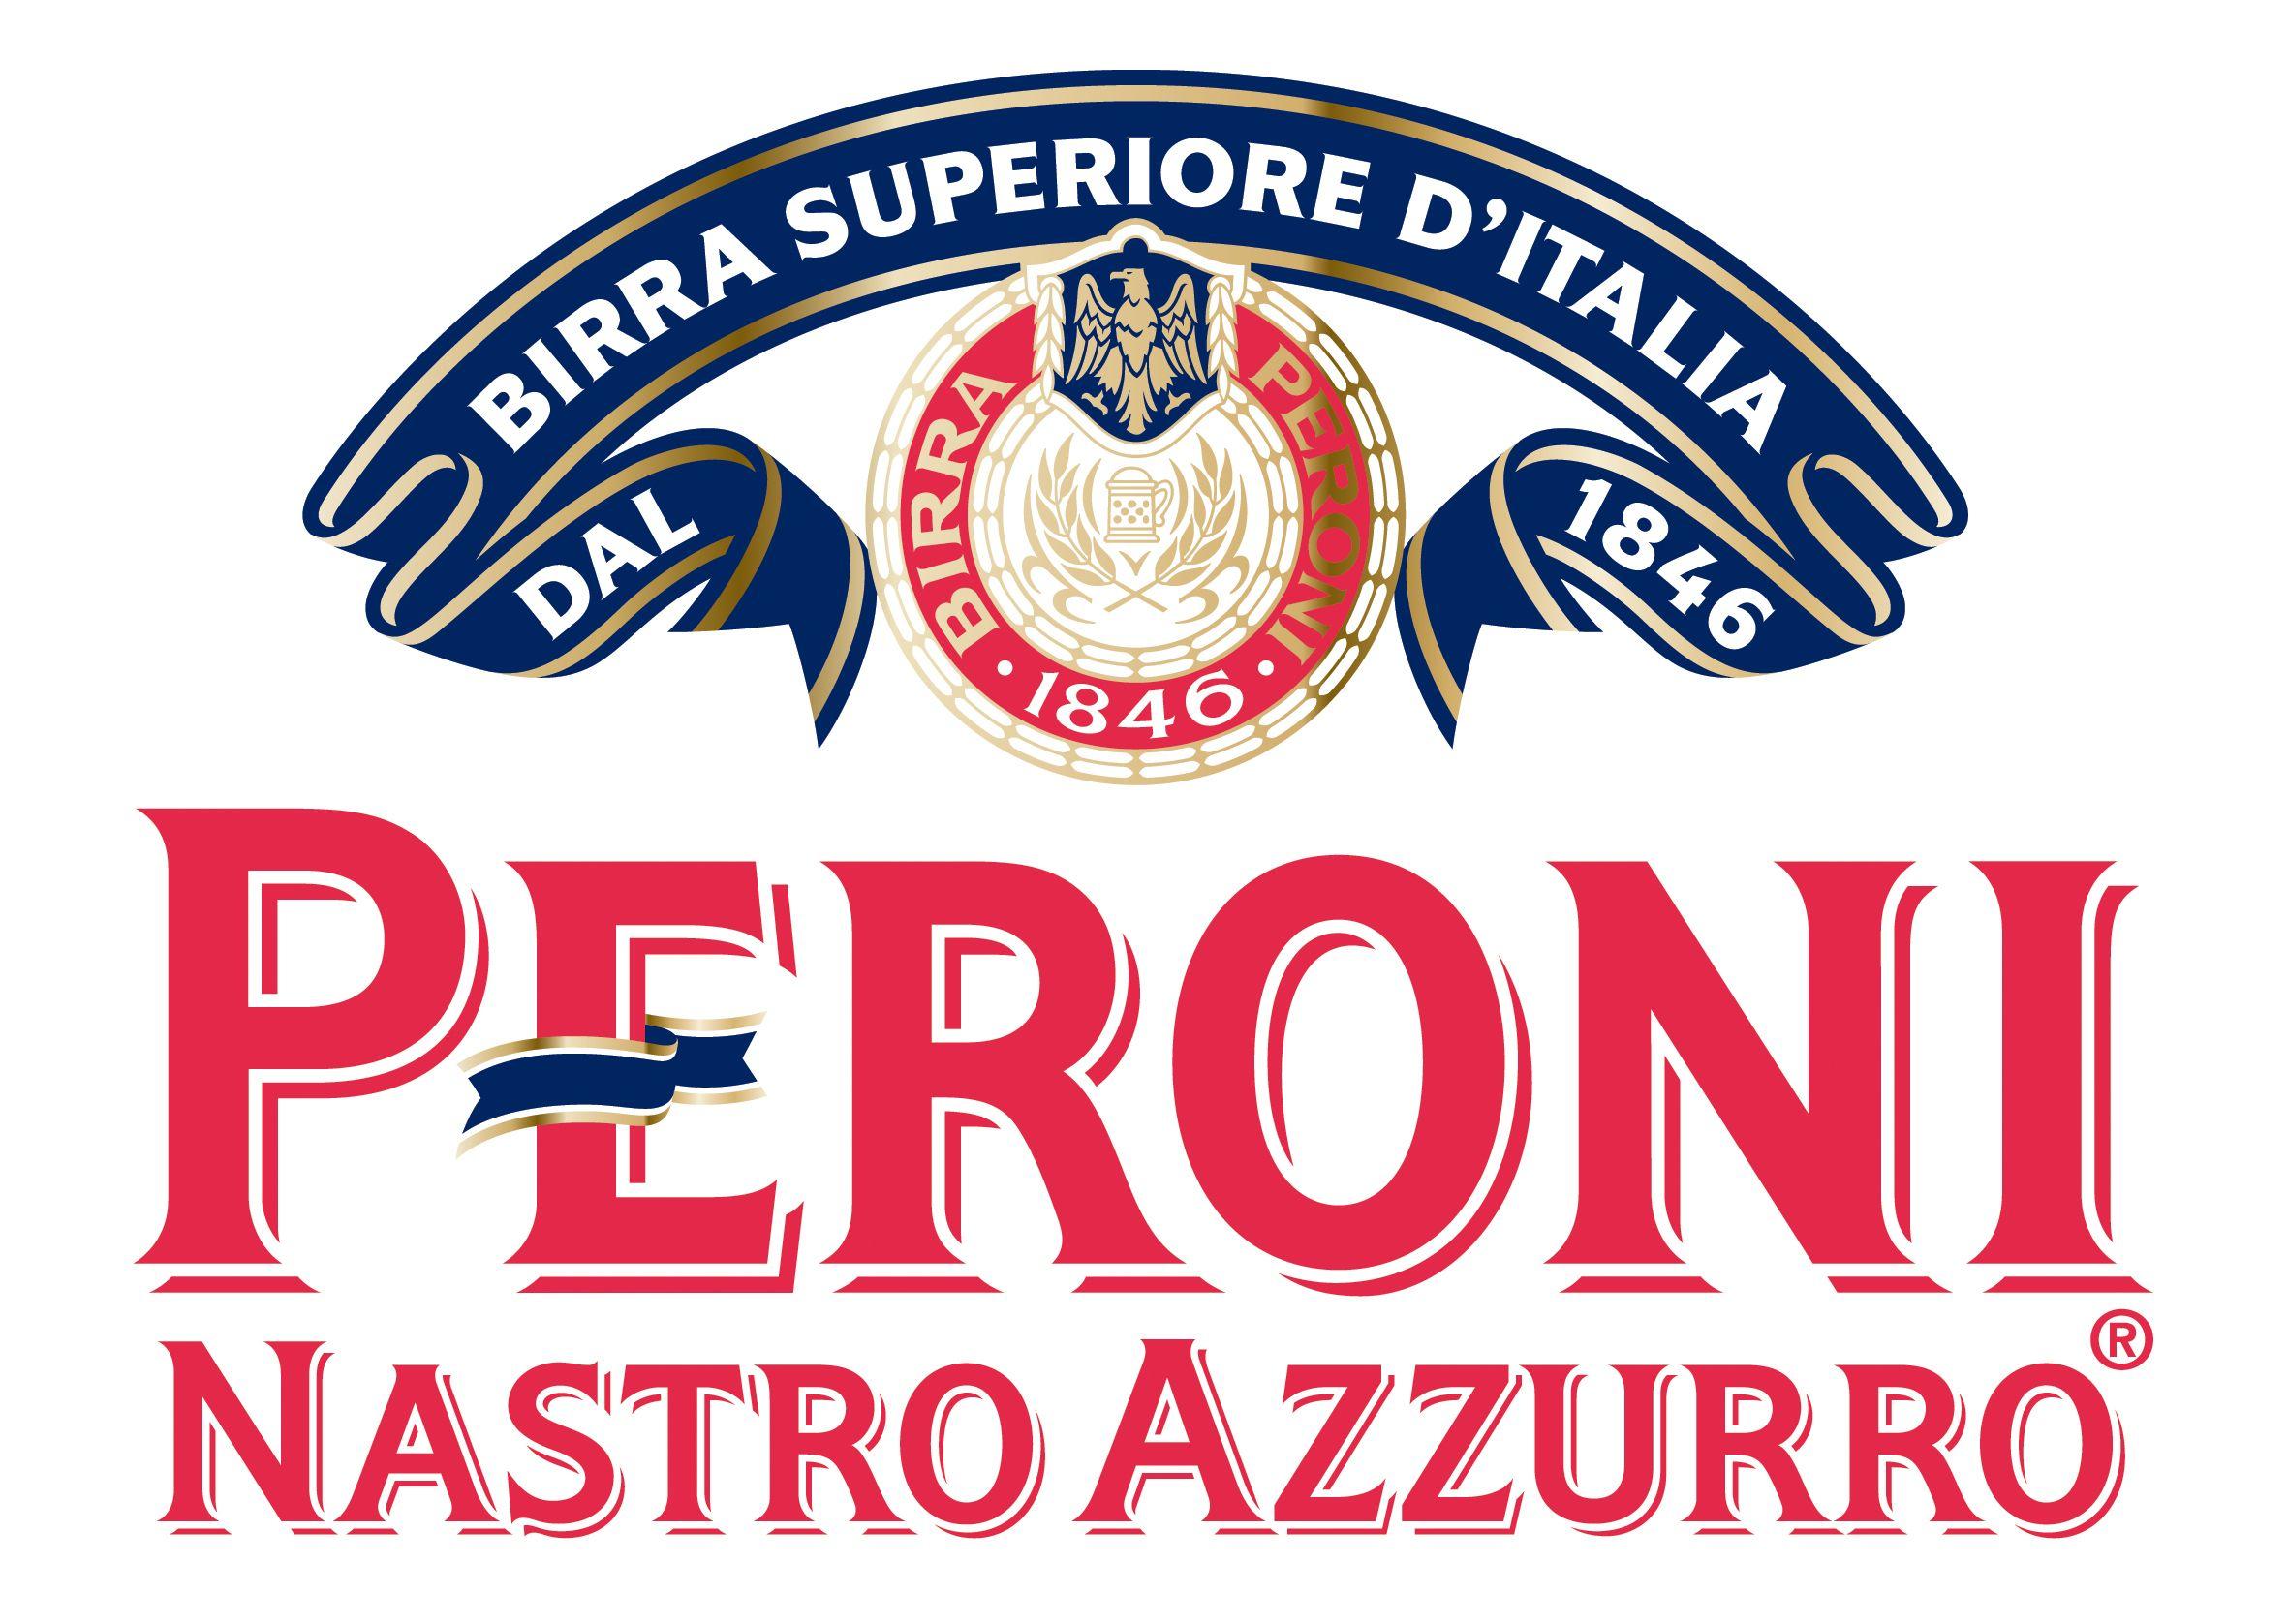 Peroni Logo - peroni nastro azzurro | Beer Labels & Logos | Beer, Beer signs, Beer ...